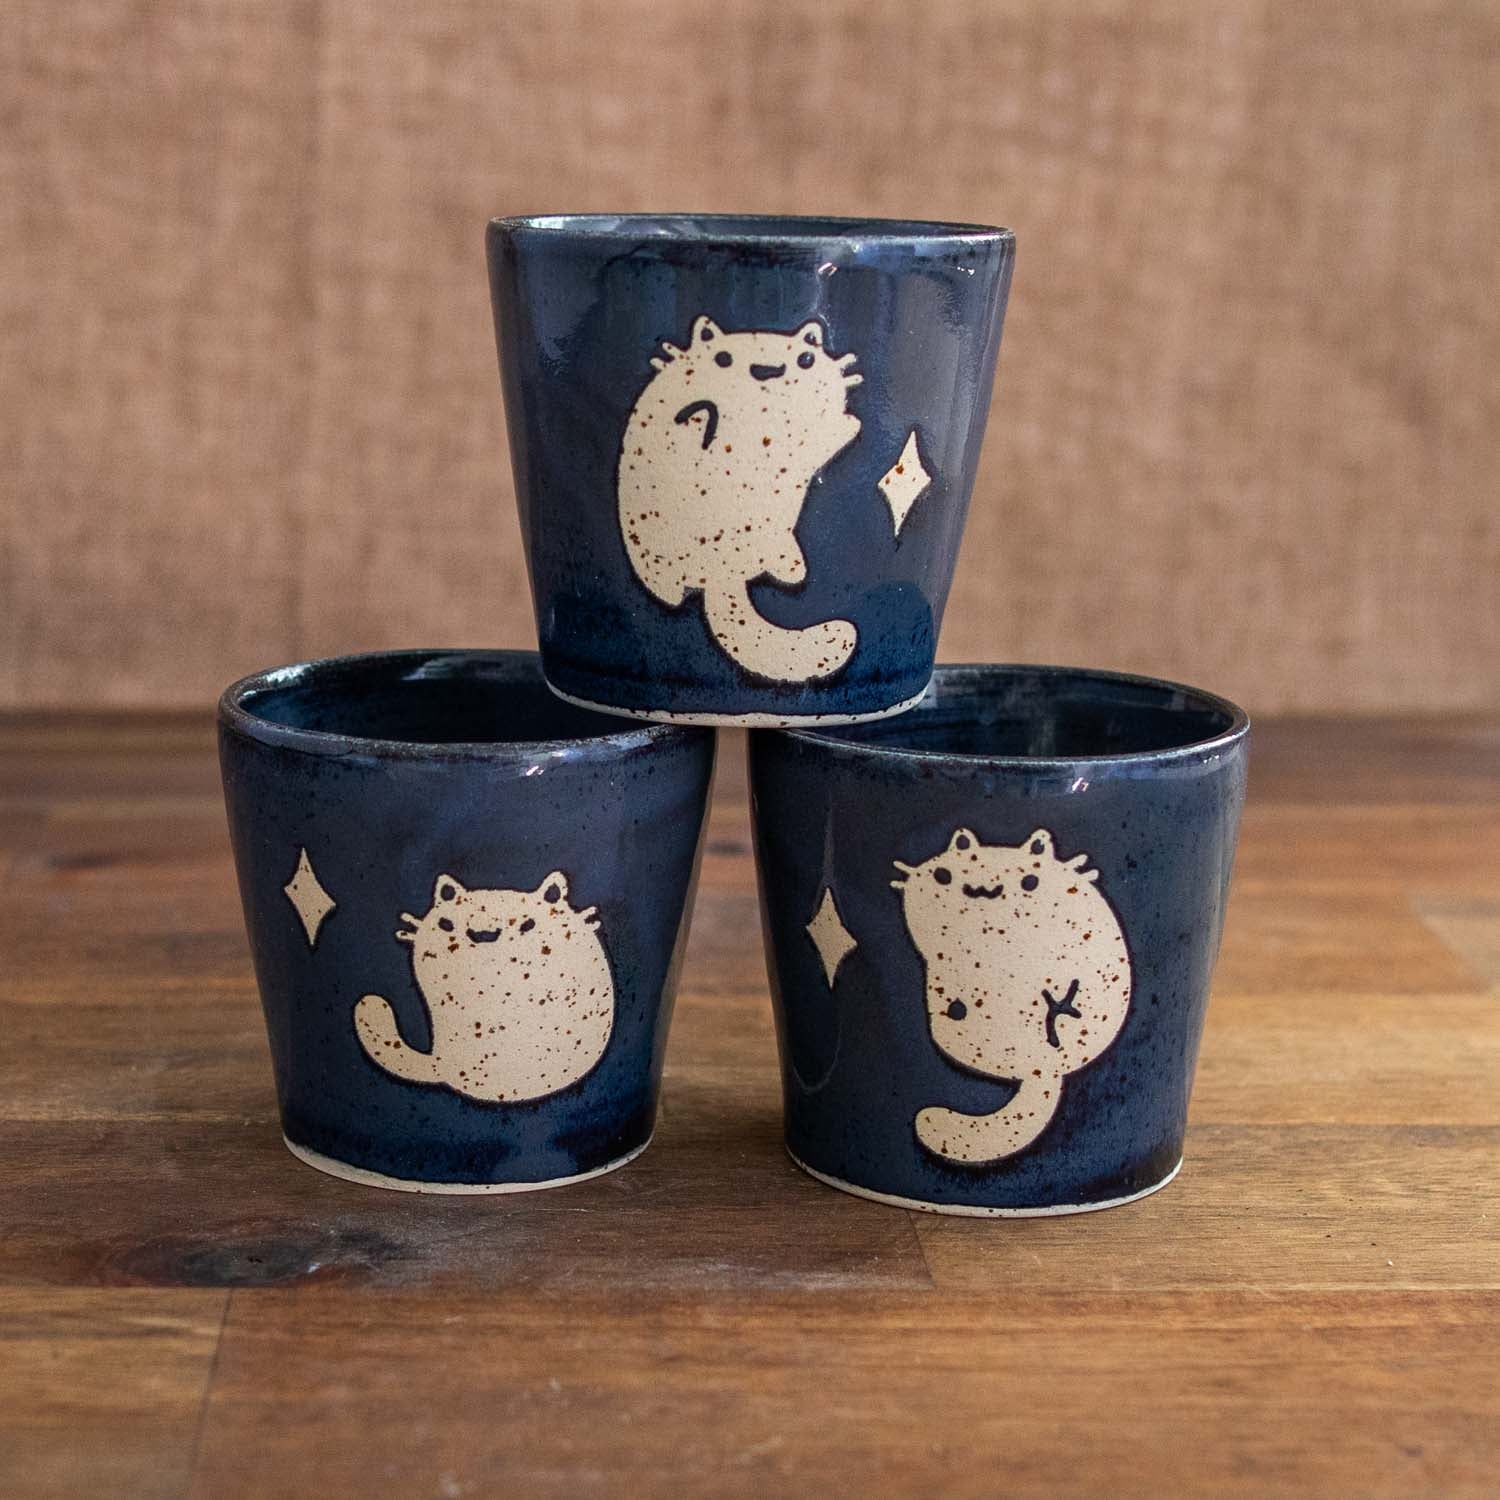 Kitty tea cups (set of 3, grey/black)